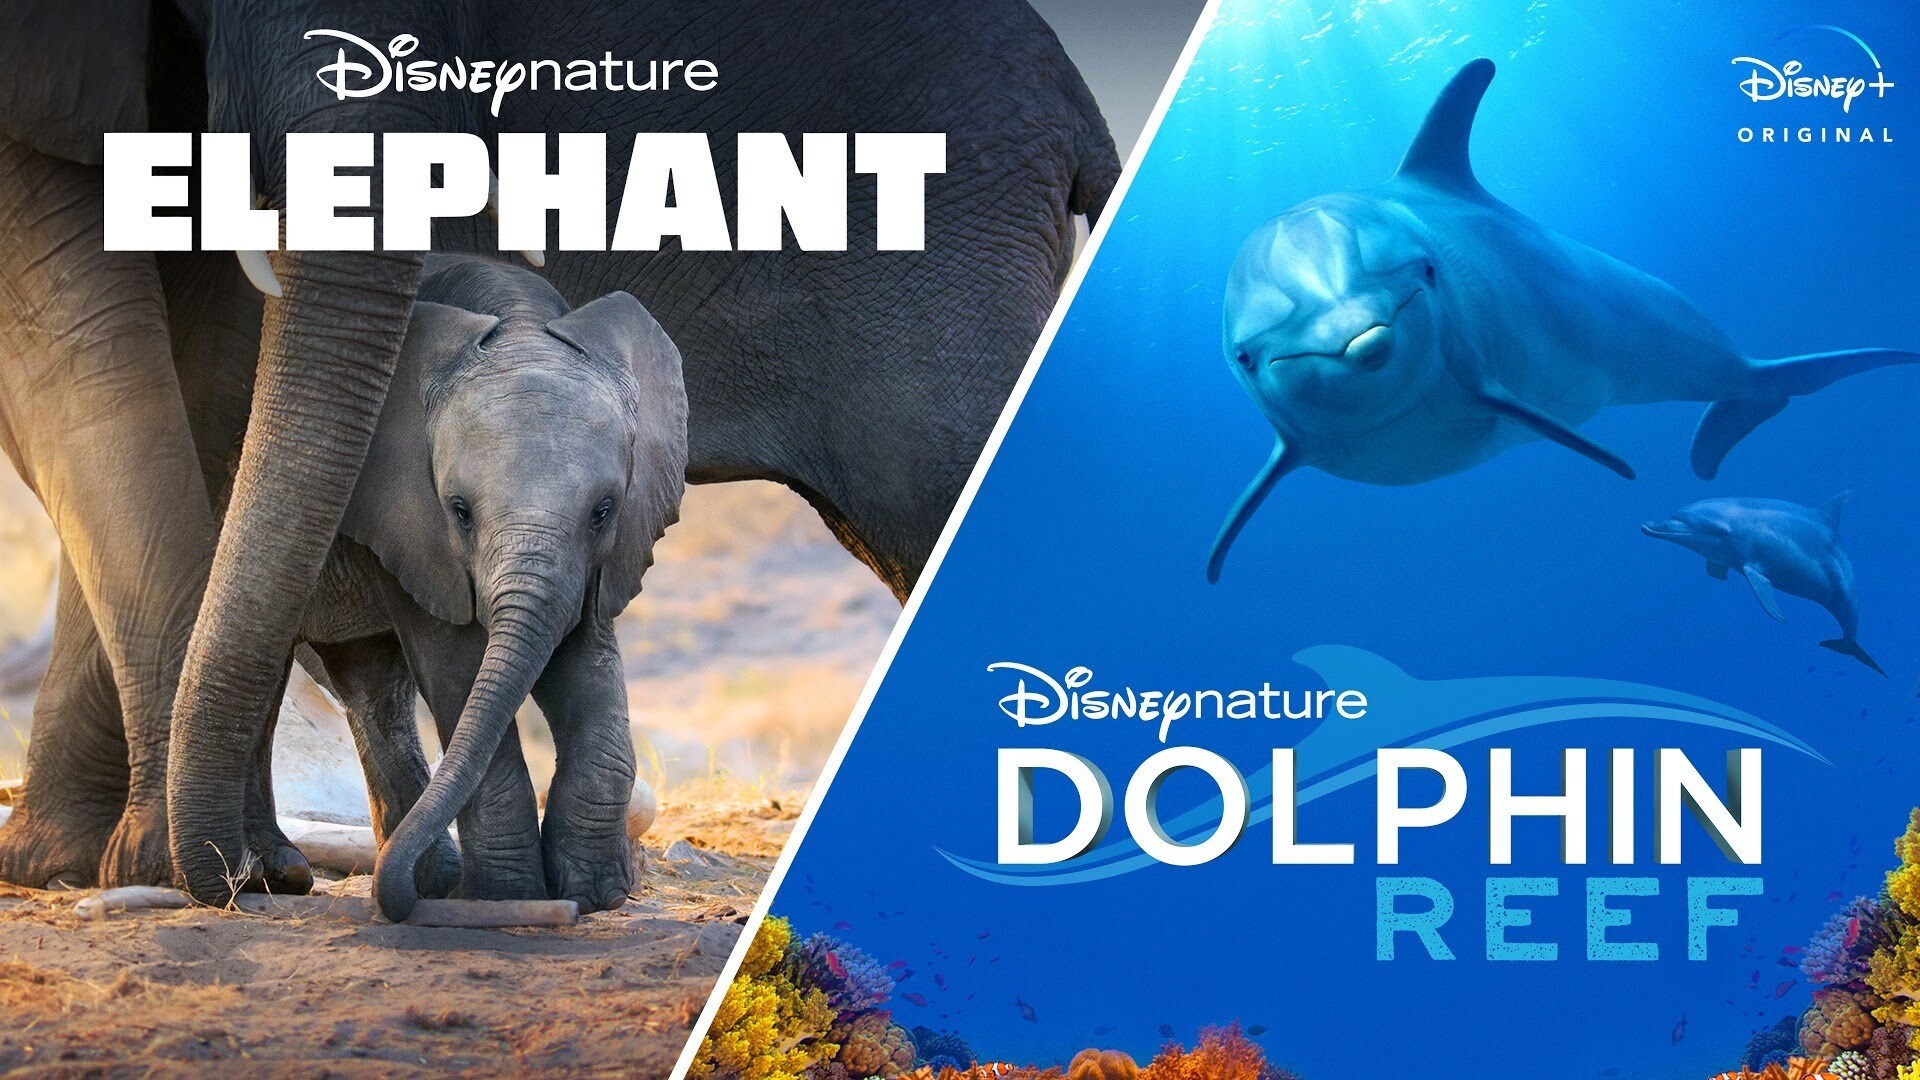 Disneynature’s Elephant & Dolphin Reef | Official Trailer | Disney+